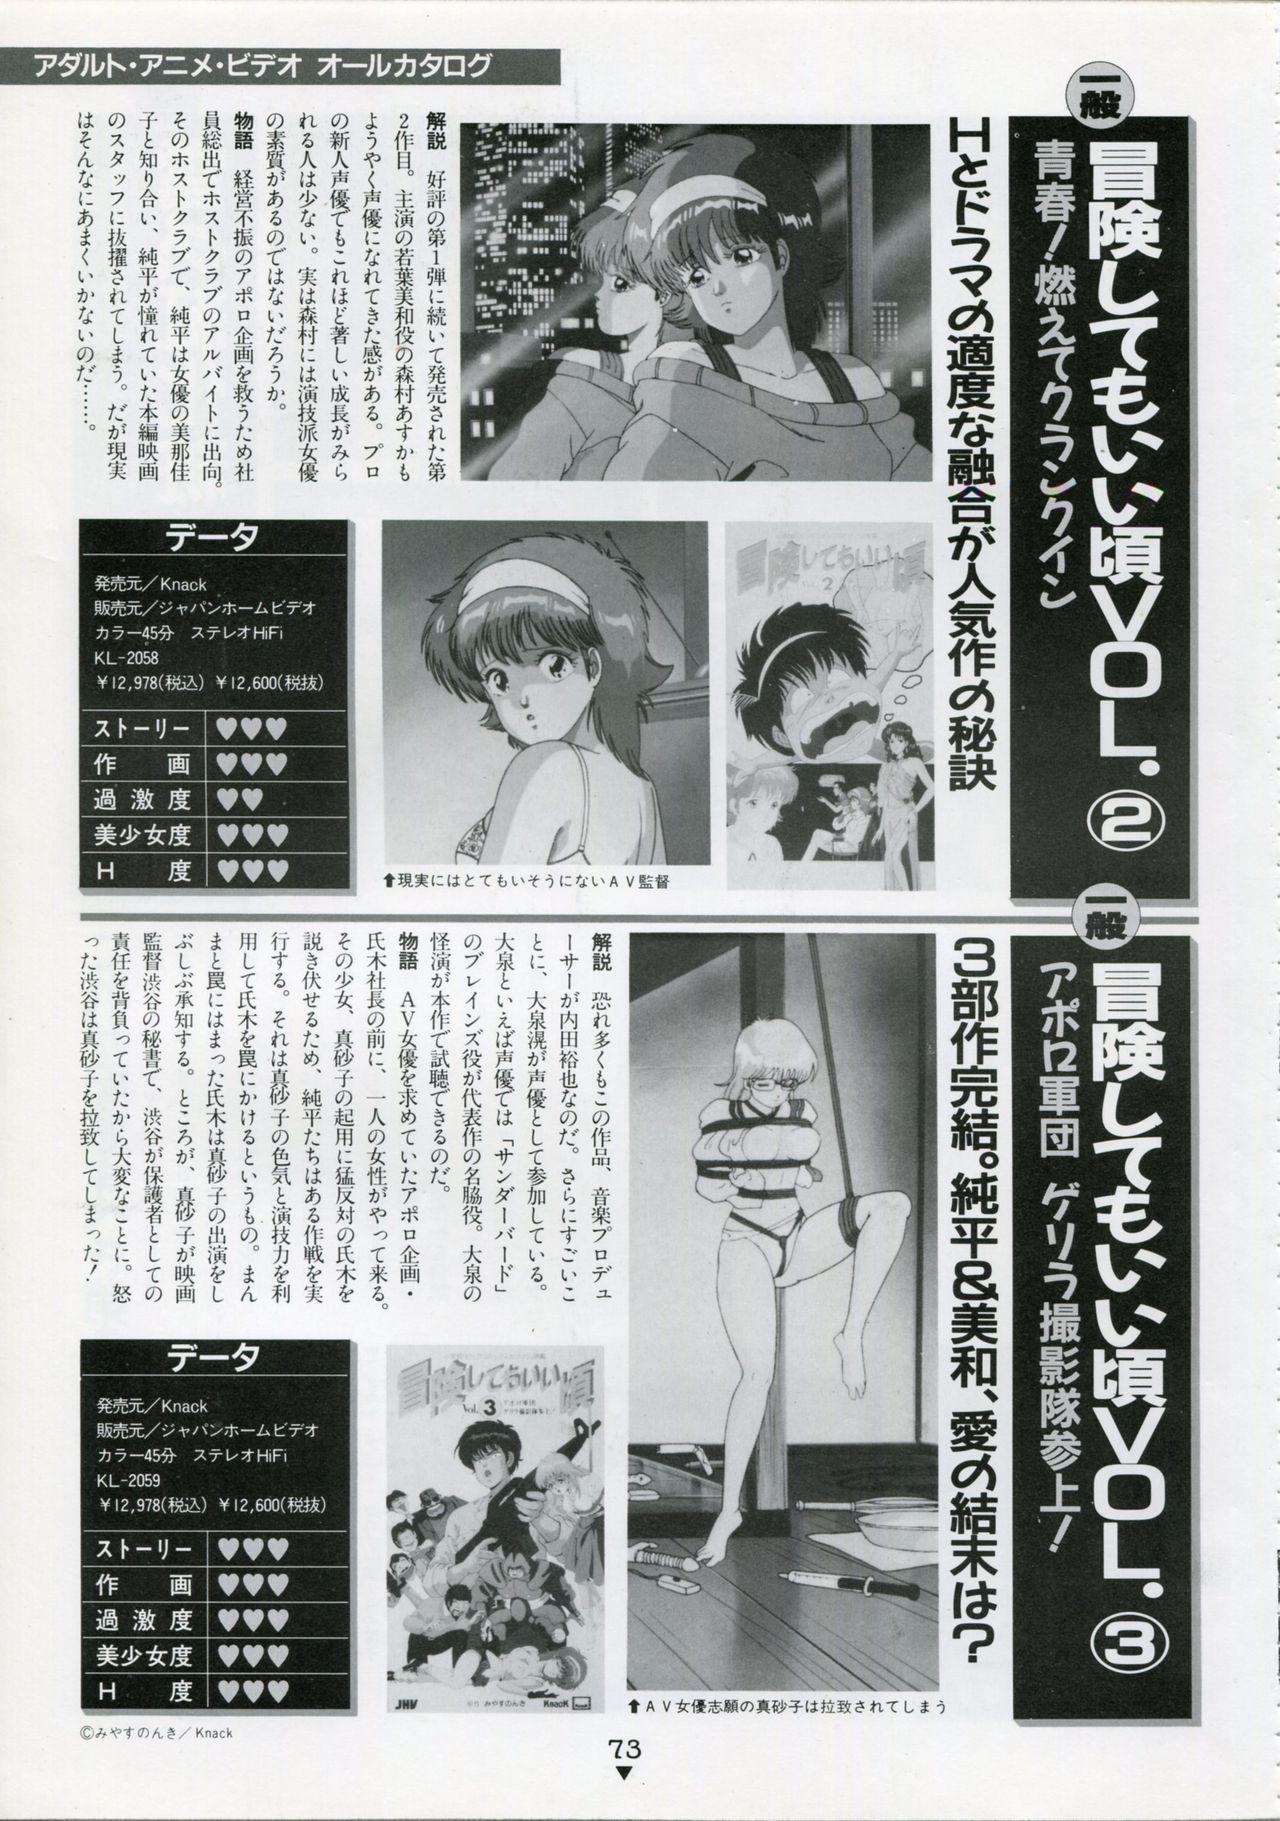 Bishoujo Anime Daizenshuu - Adult Animation Video Catalog 1991 68